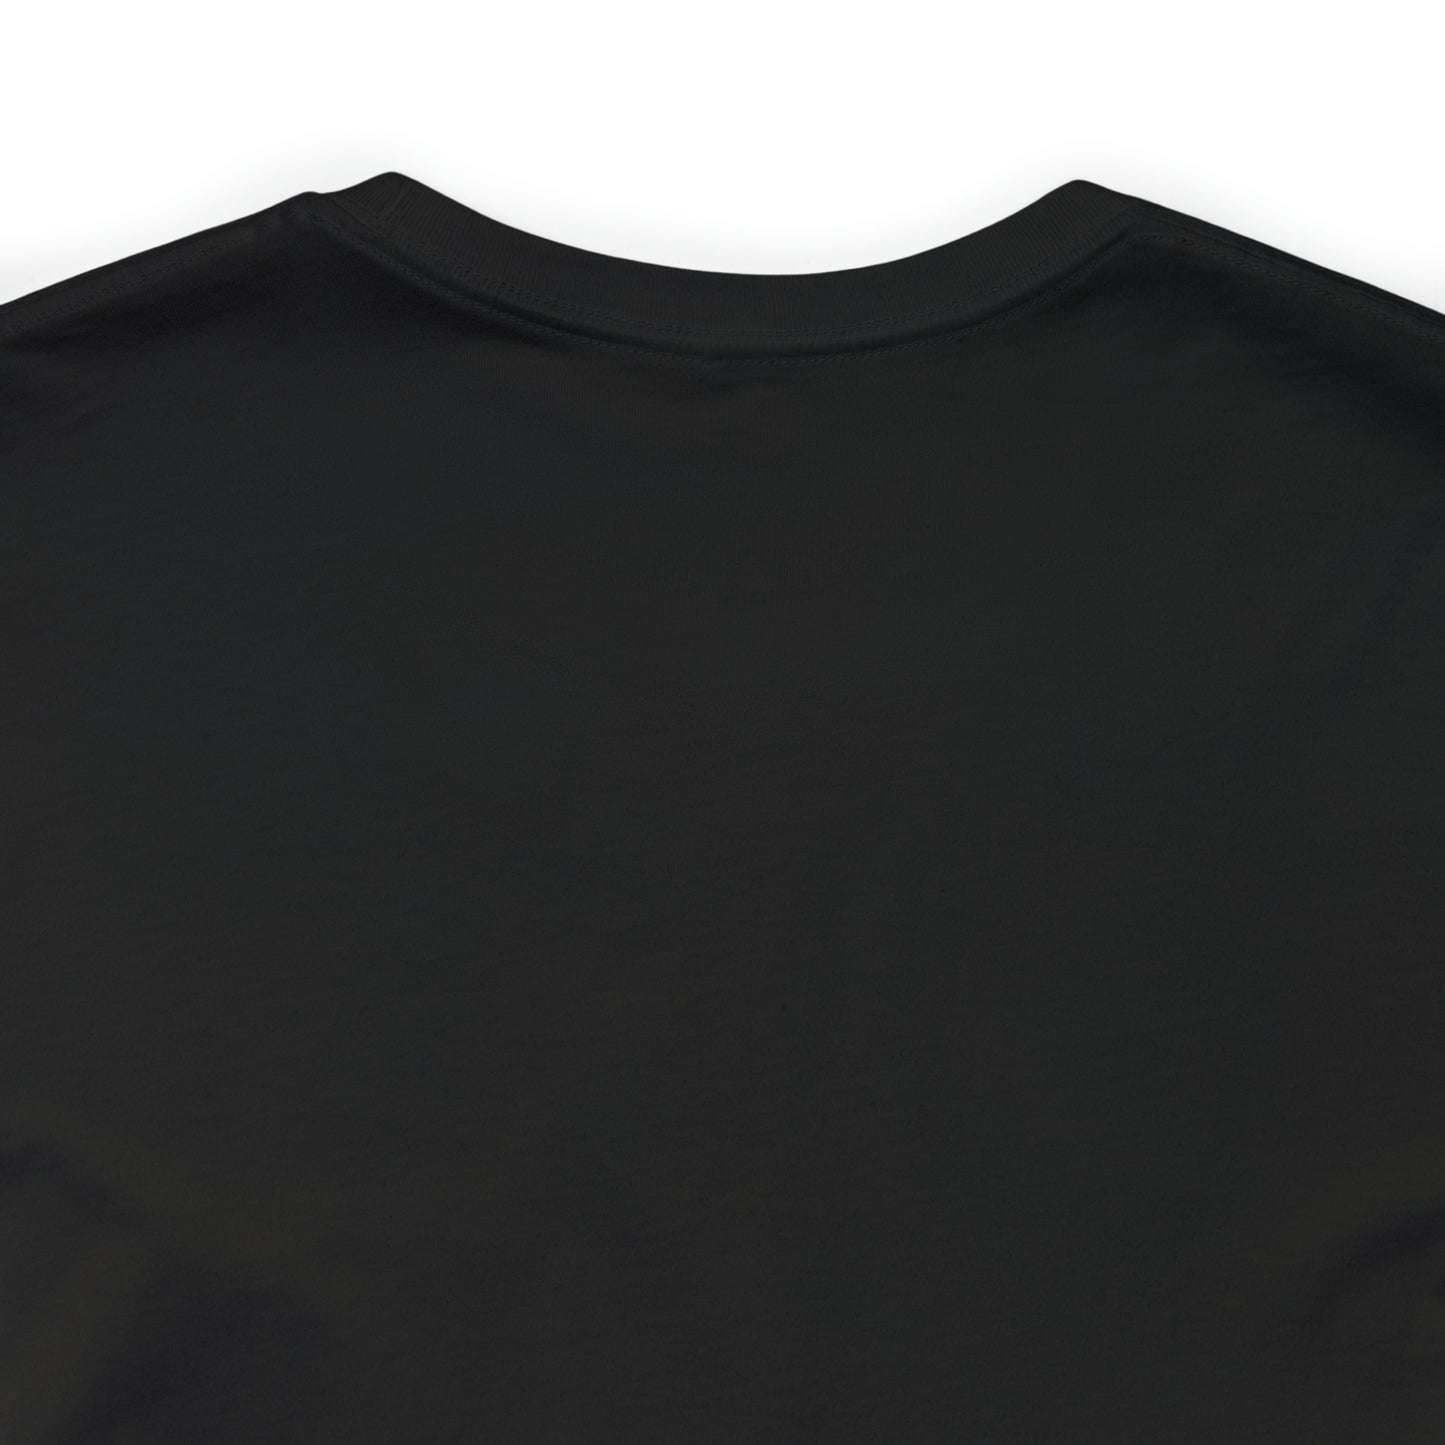 Comfy Short Sleeve T-Shirt: South Africa